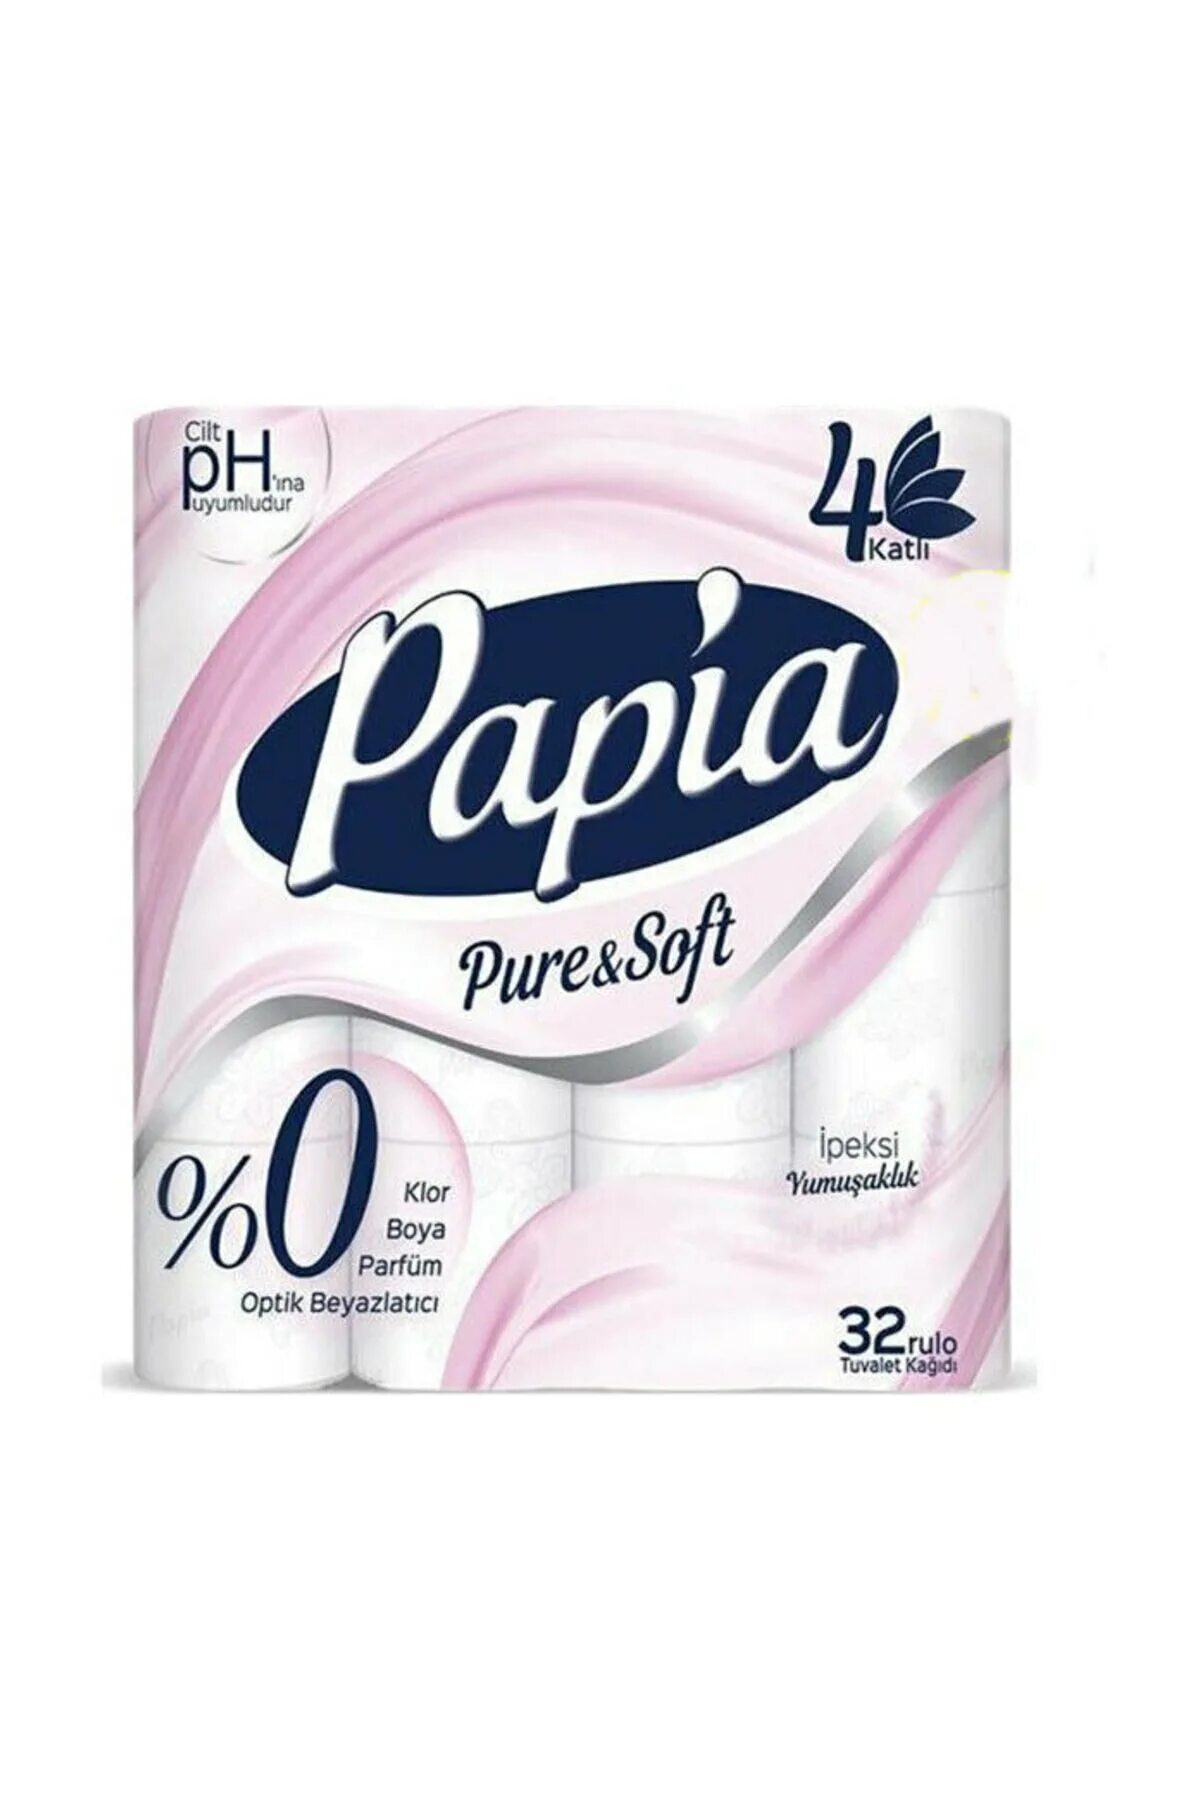 Papia Toilet paper 32. Papia туалетная бумага 32 рулона. Четырехслойная туалетная бумага. Туалетная бумага Папия и фамилия.